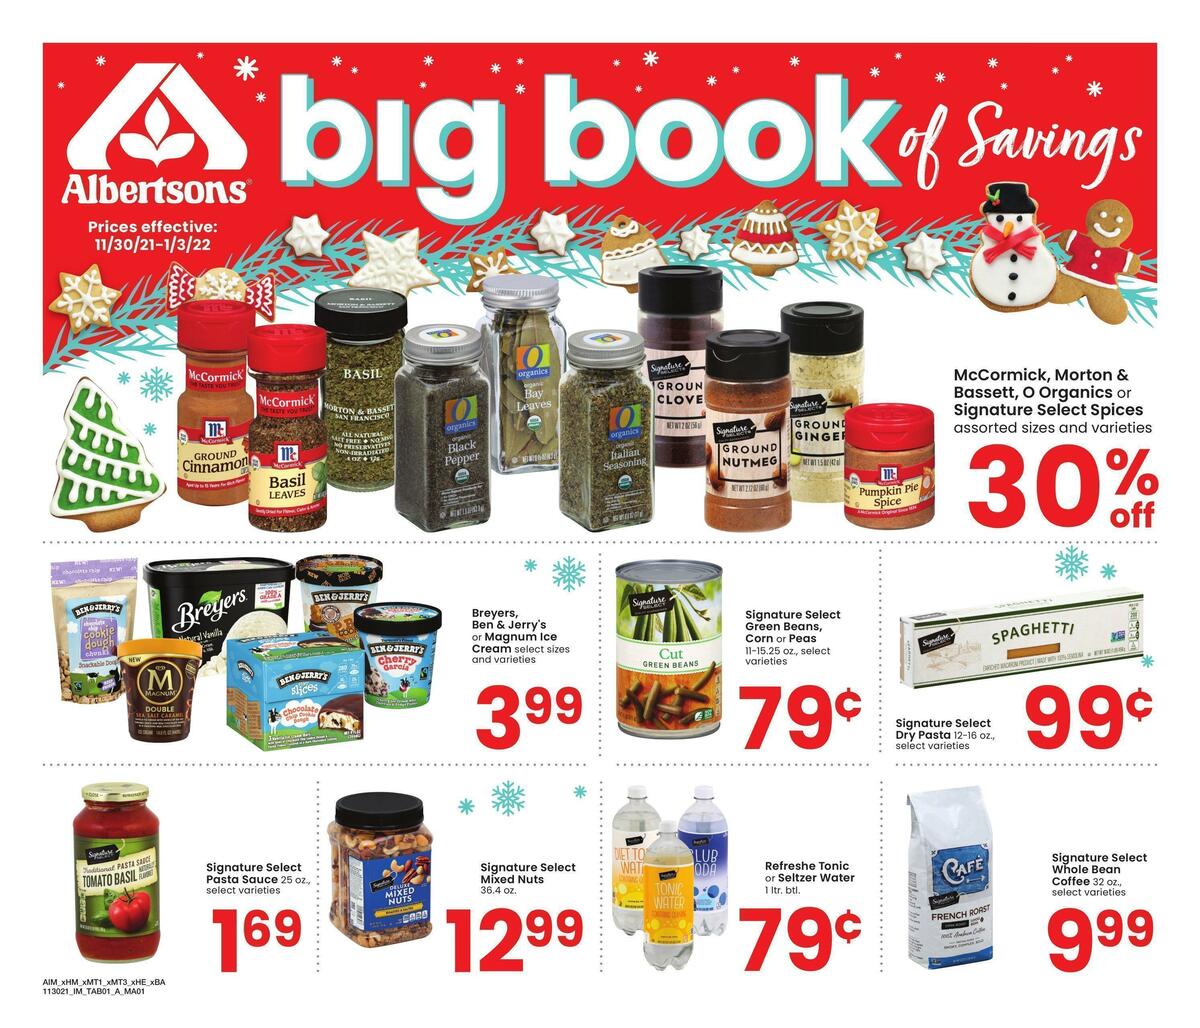 Albertsons Big Book of Savings Weekly Ad from November 30